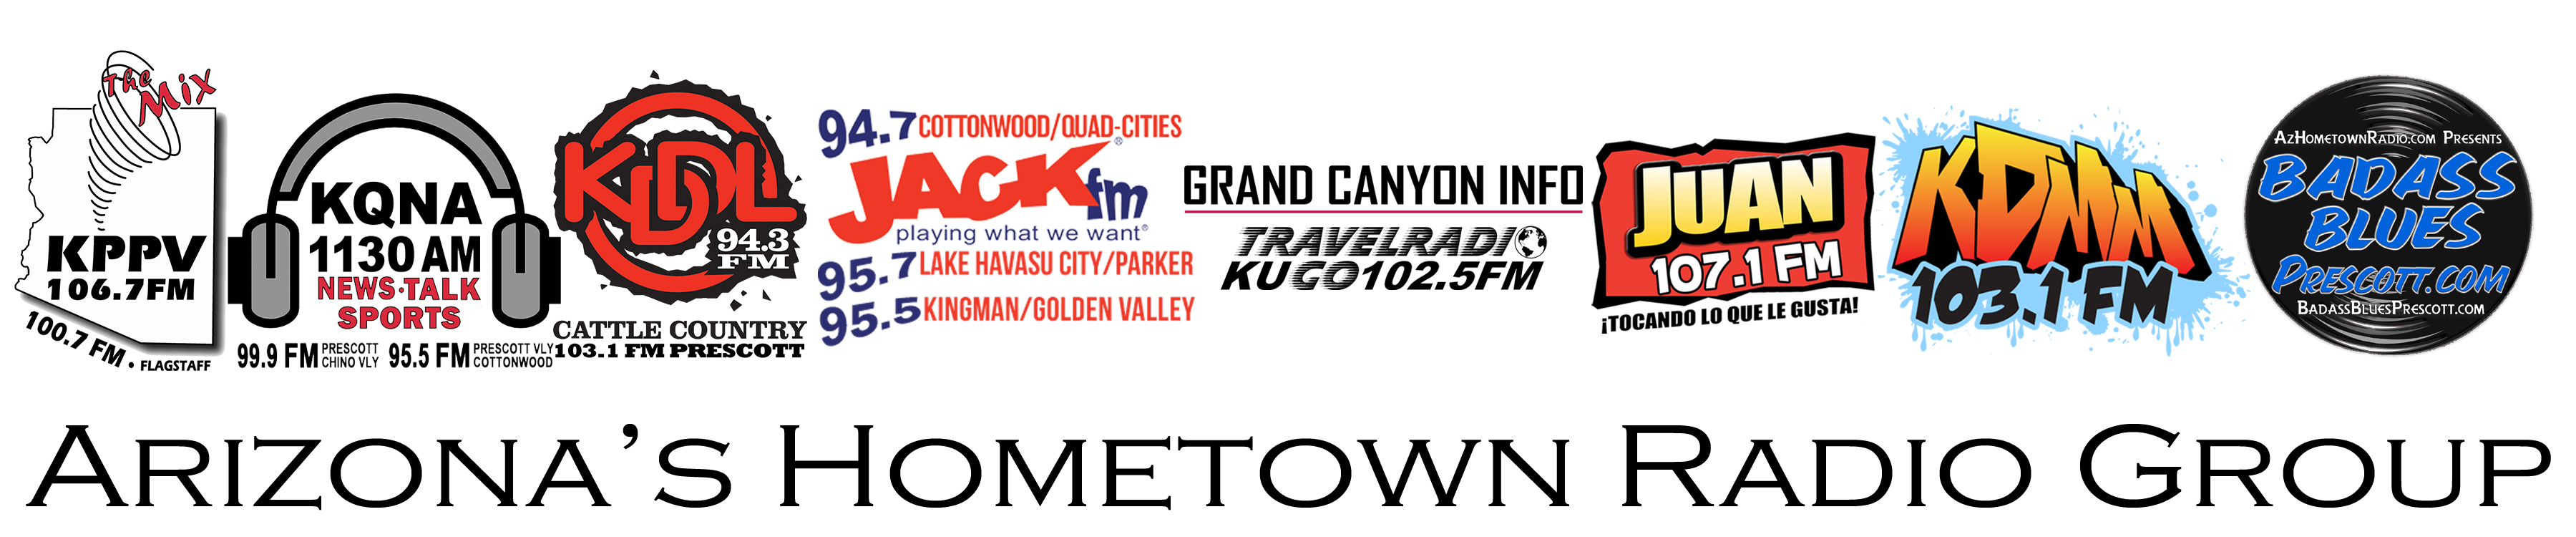 Arizona's Hometown Radio Group 